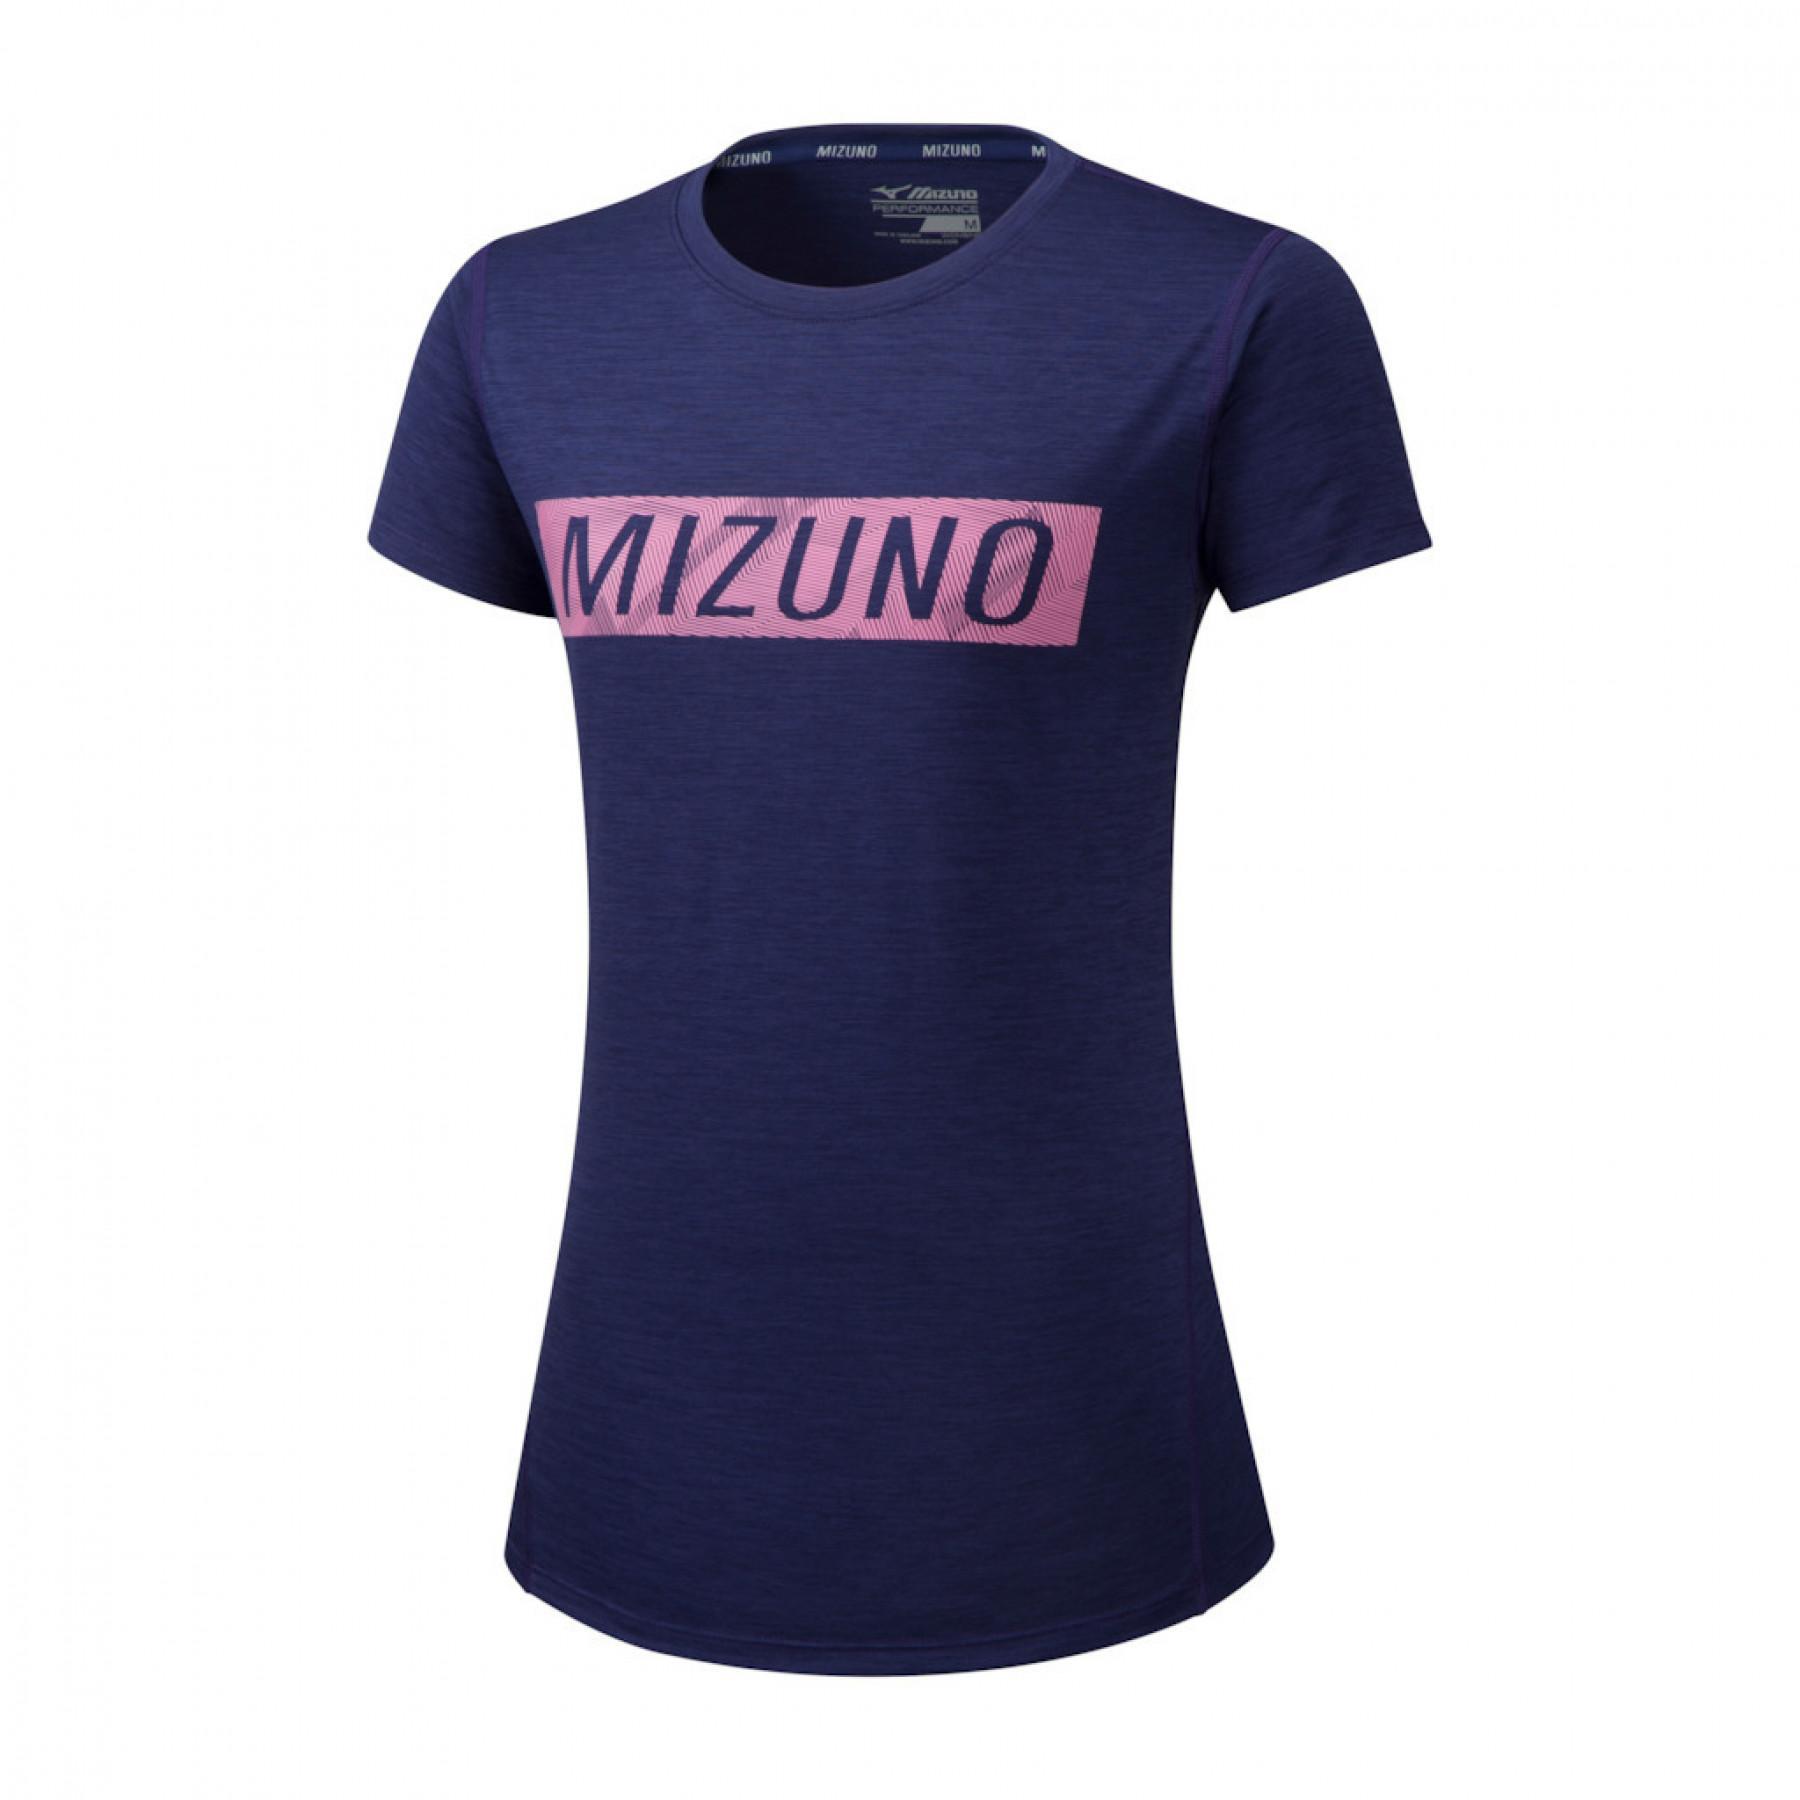 Koszulka damska Mizuno Impulse Core pro